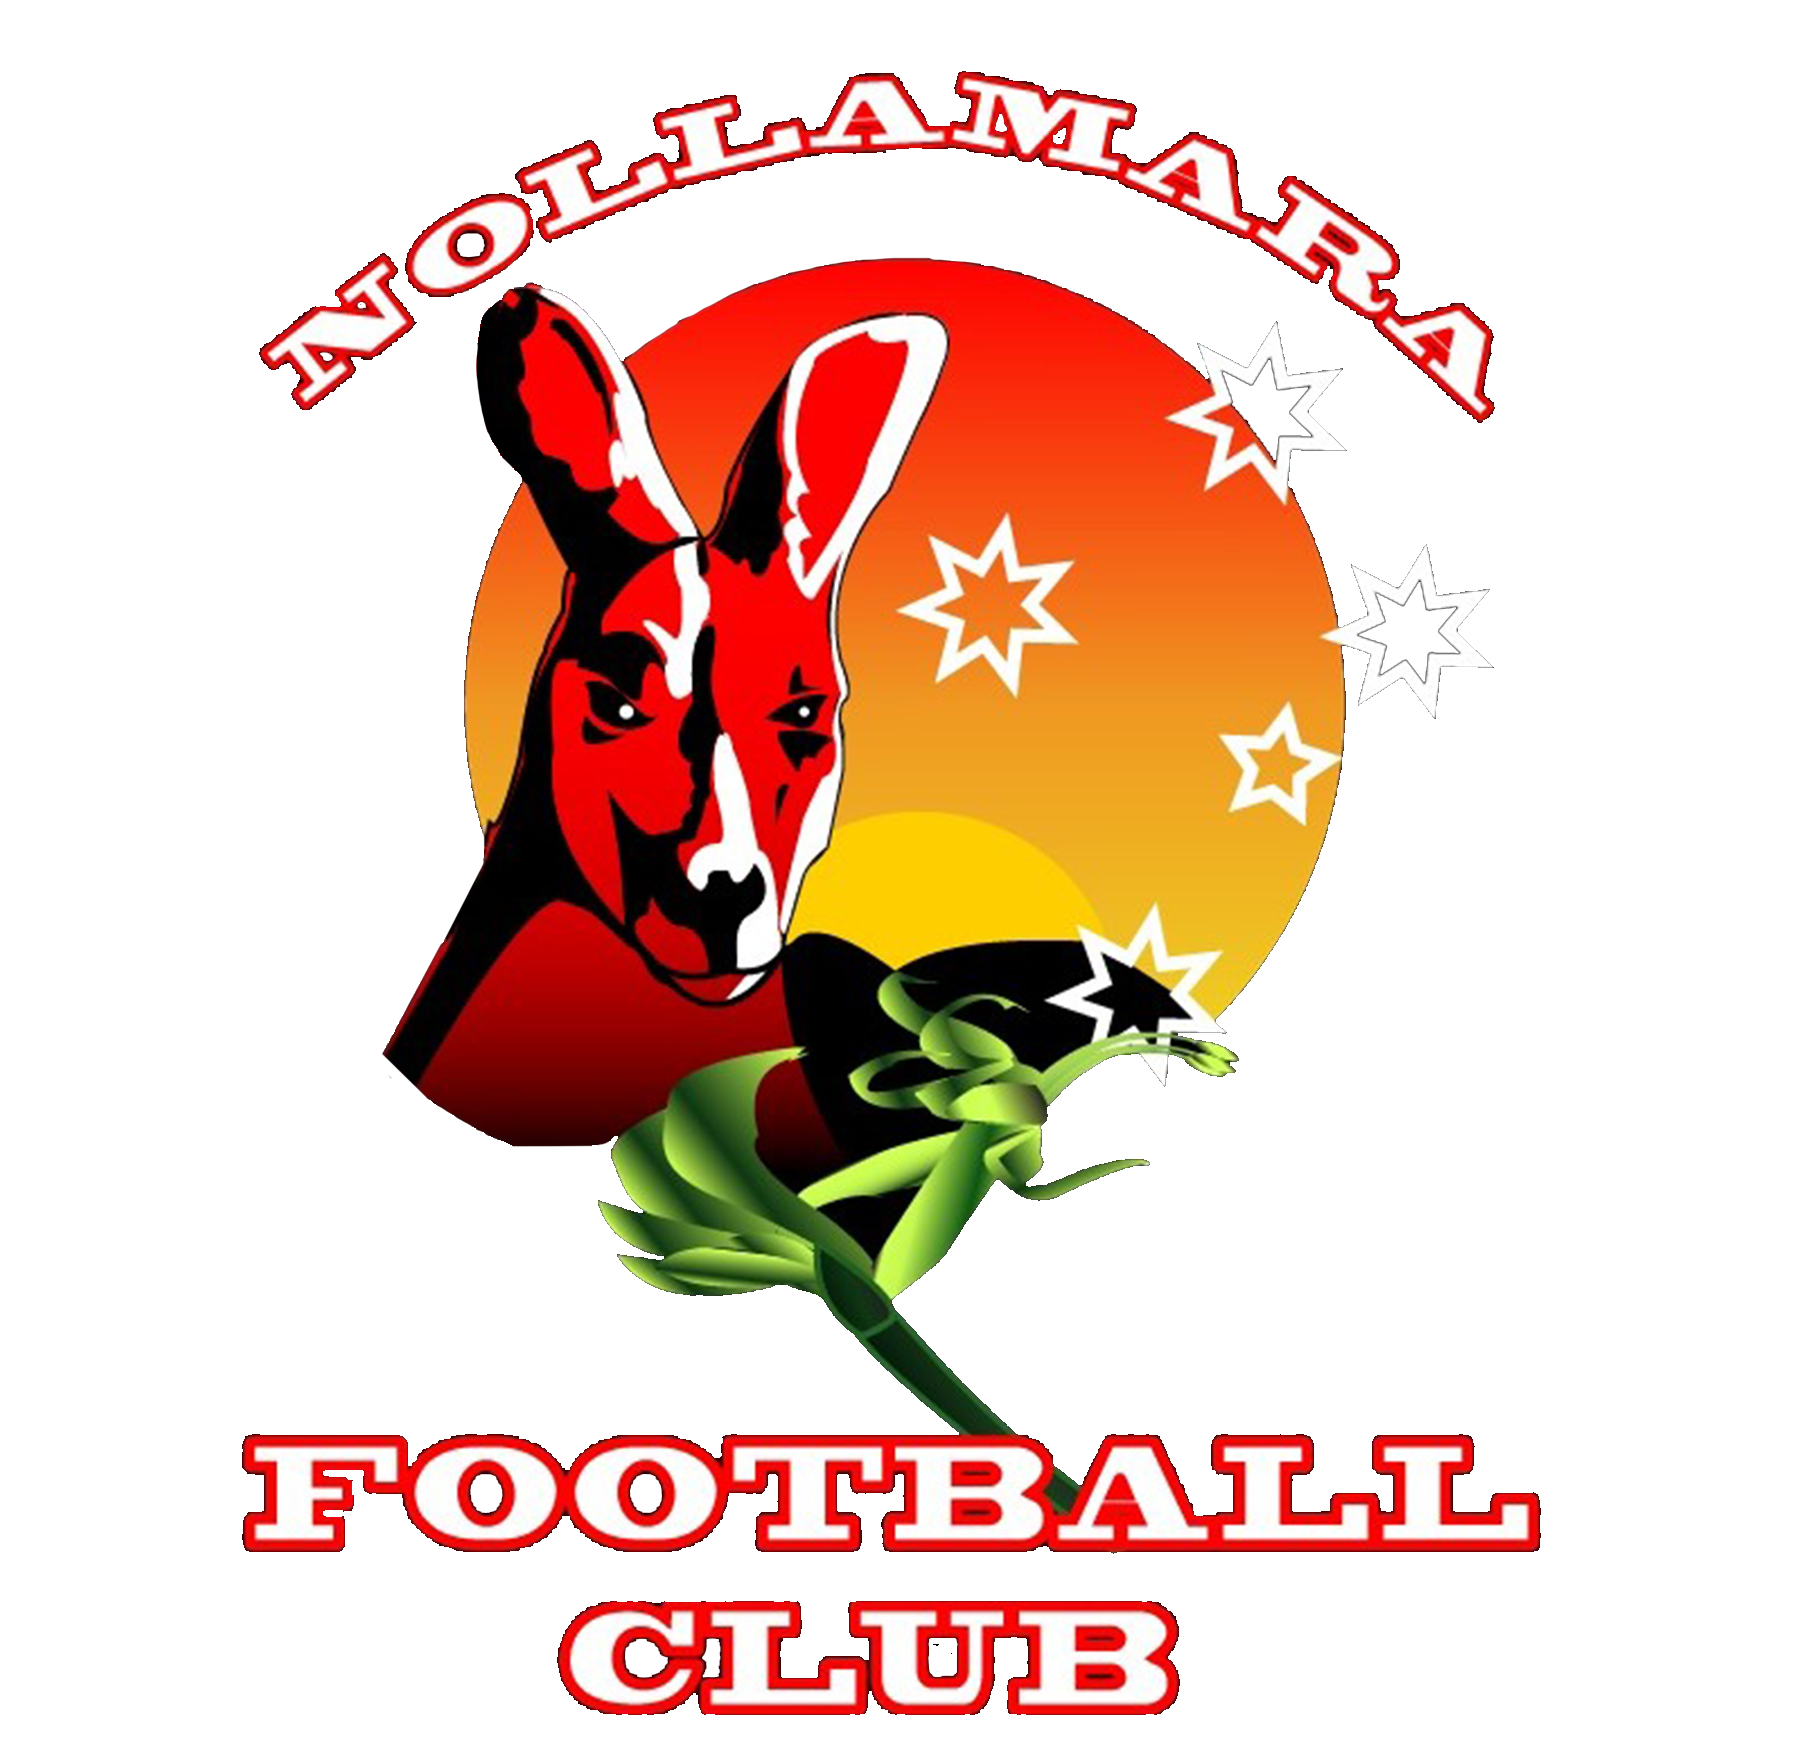 Nollamara Football Club